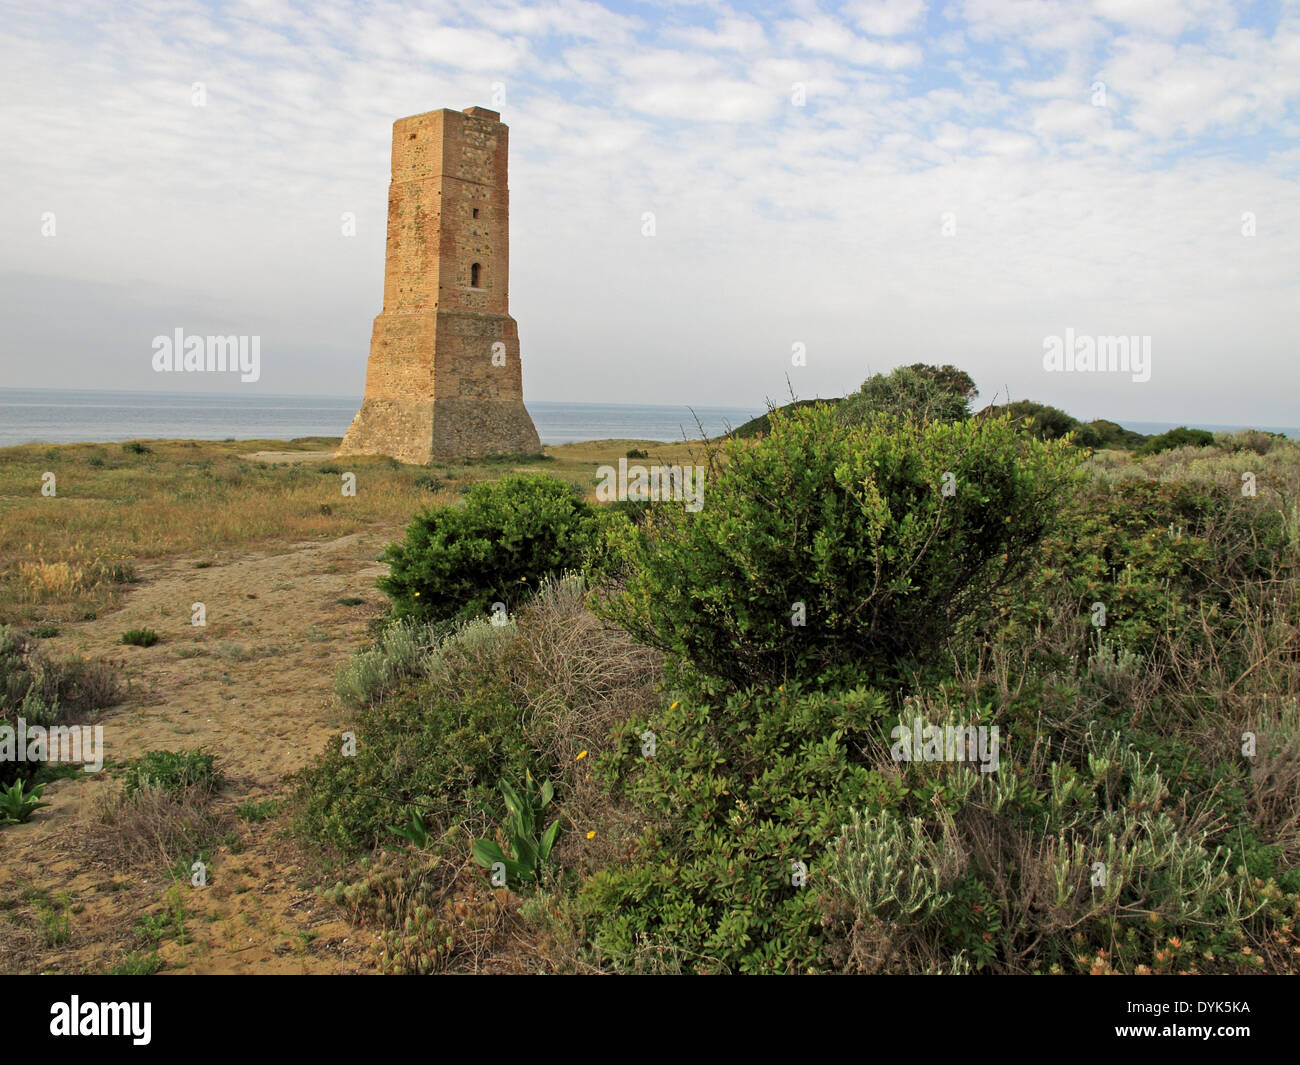 Torre De Los Ladrones at Cobopino beach Stock Photo